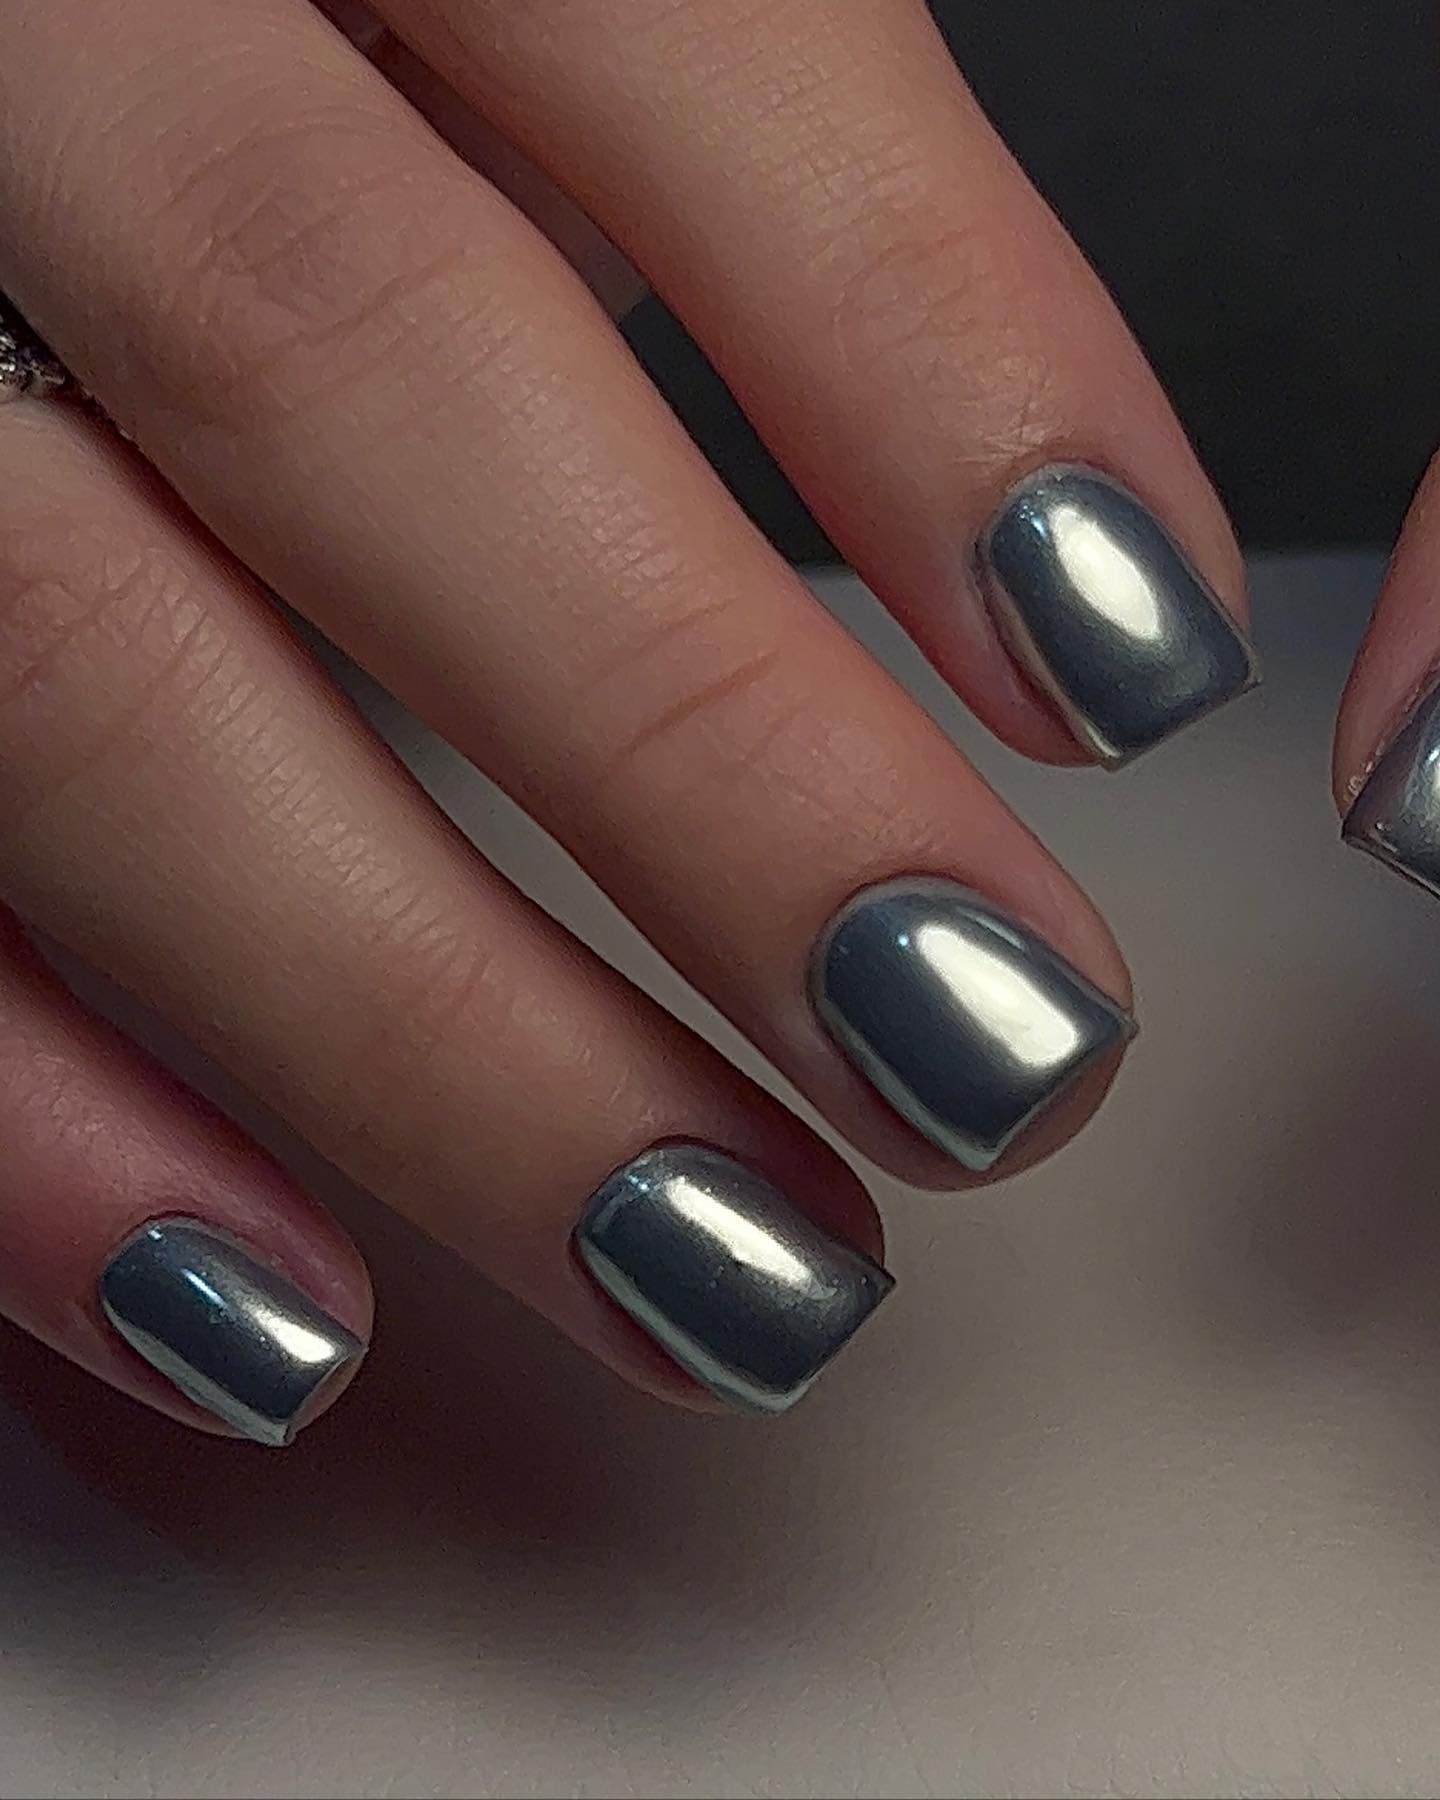 Silver Chrome Nails